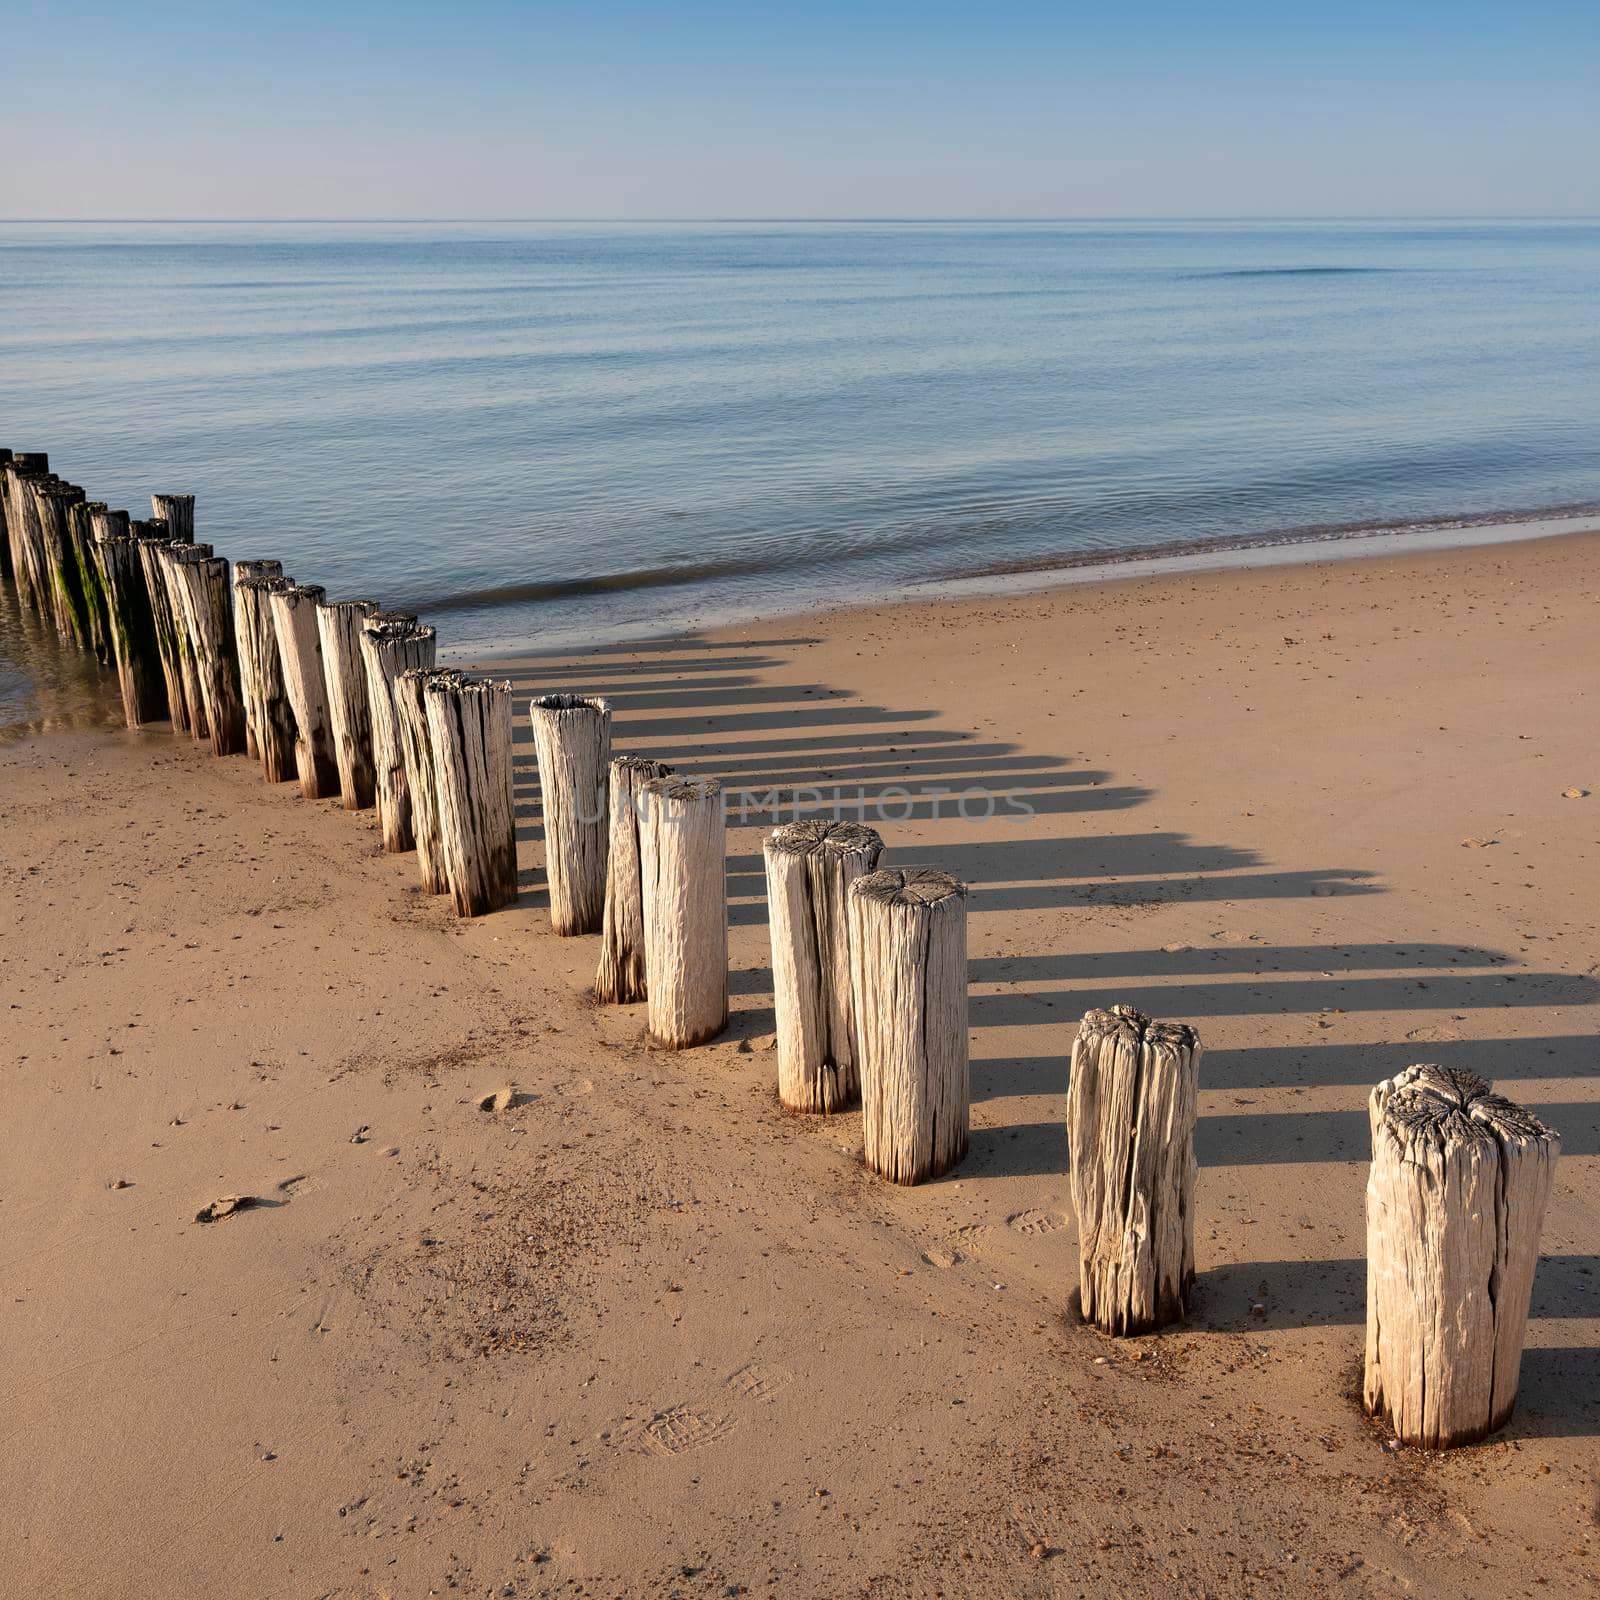 row of poles on beach of zeeland in the netherlands under blue sky in spring by ahavelaar